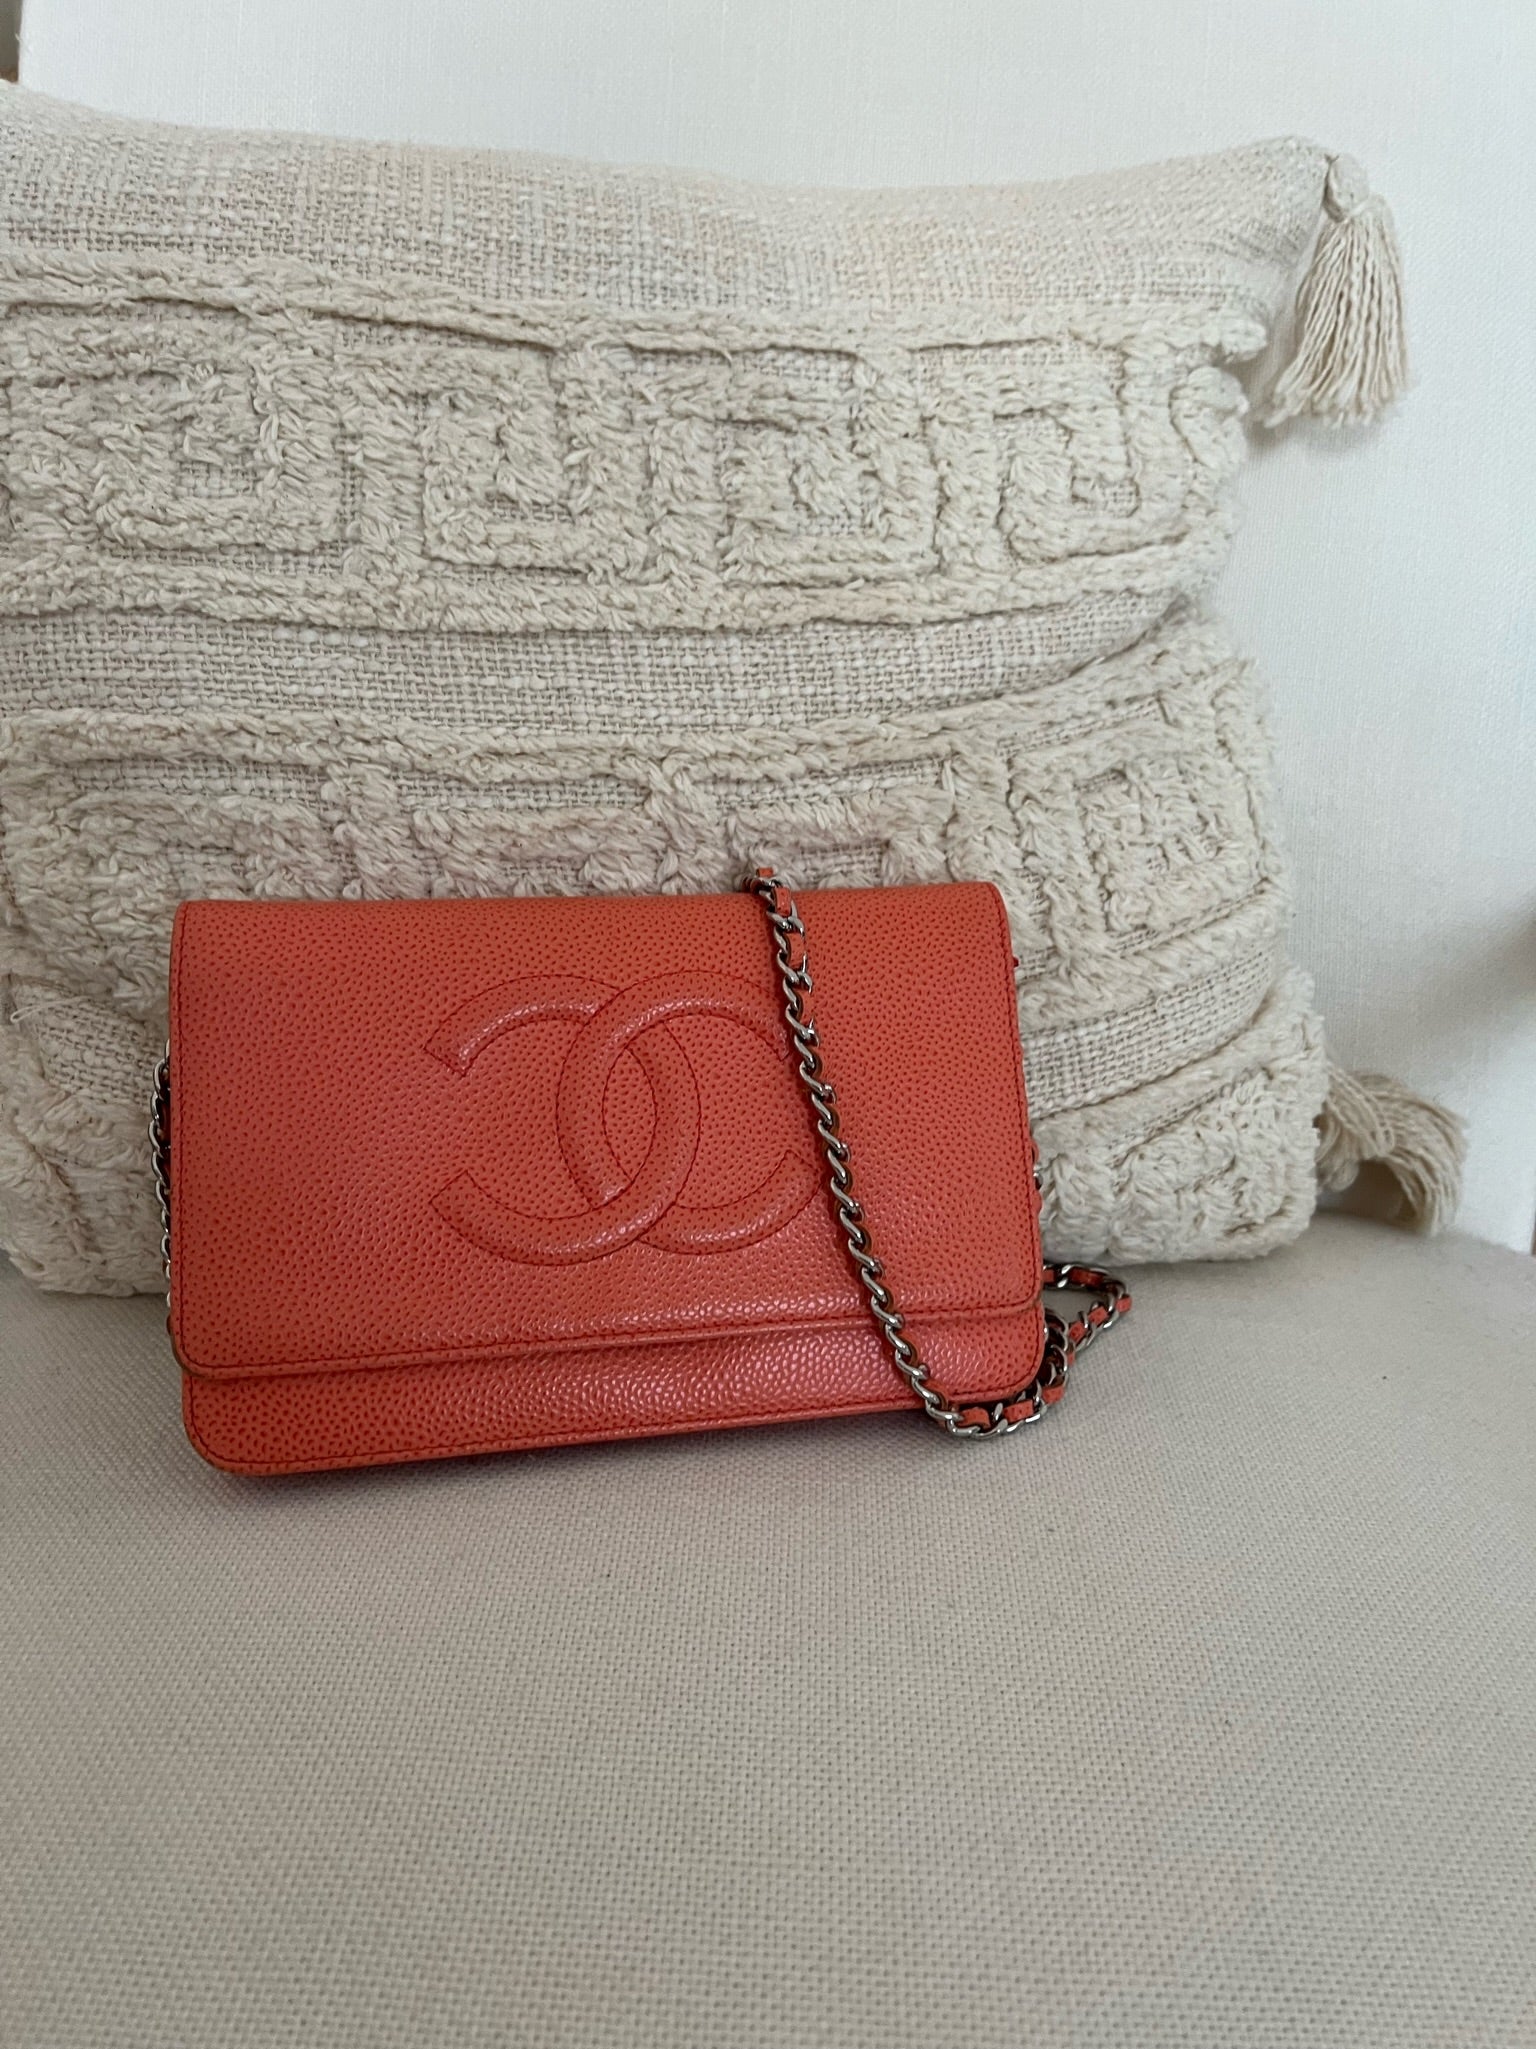 Chanel WOC Wallet on Chain Orange